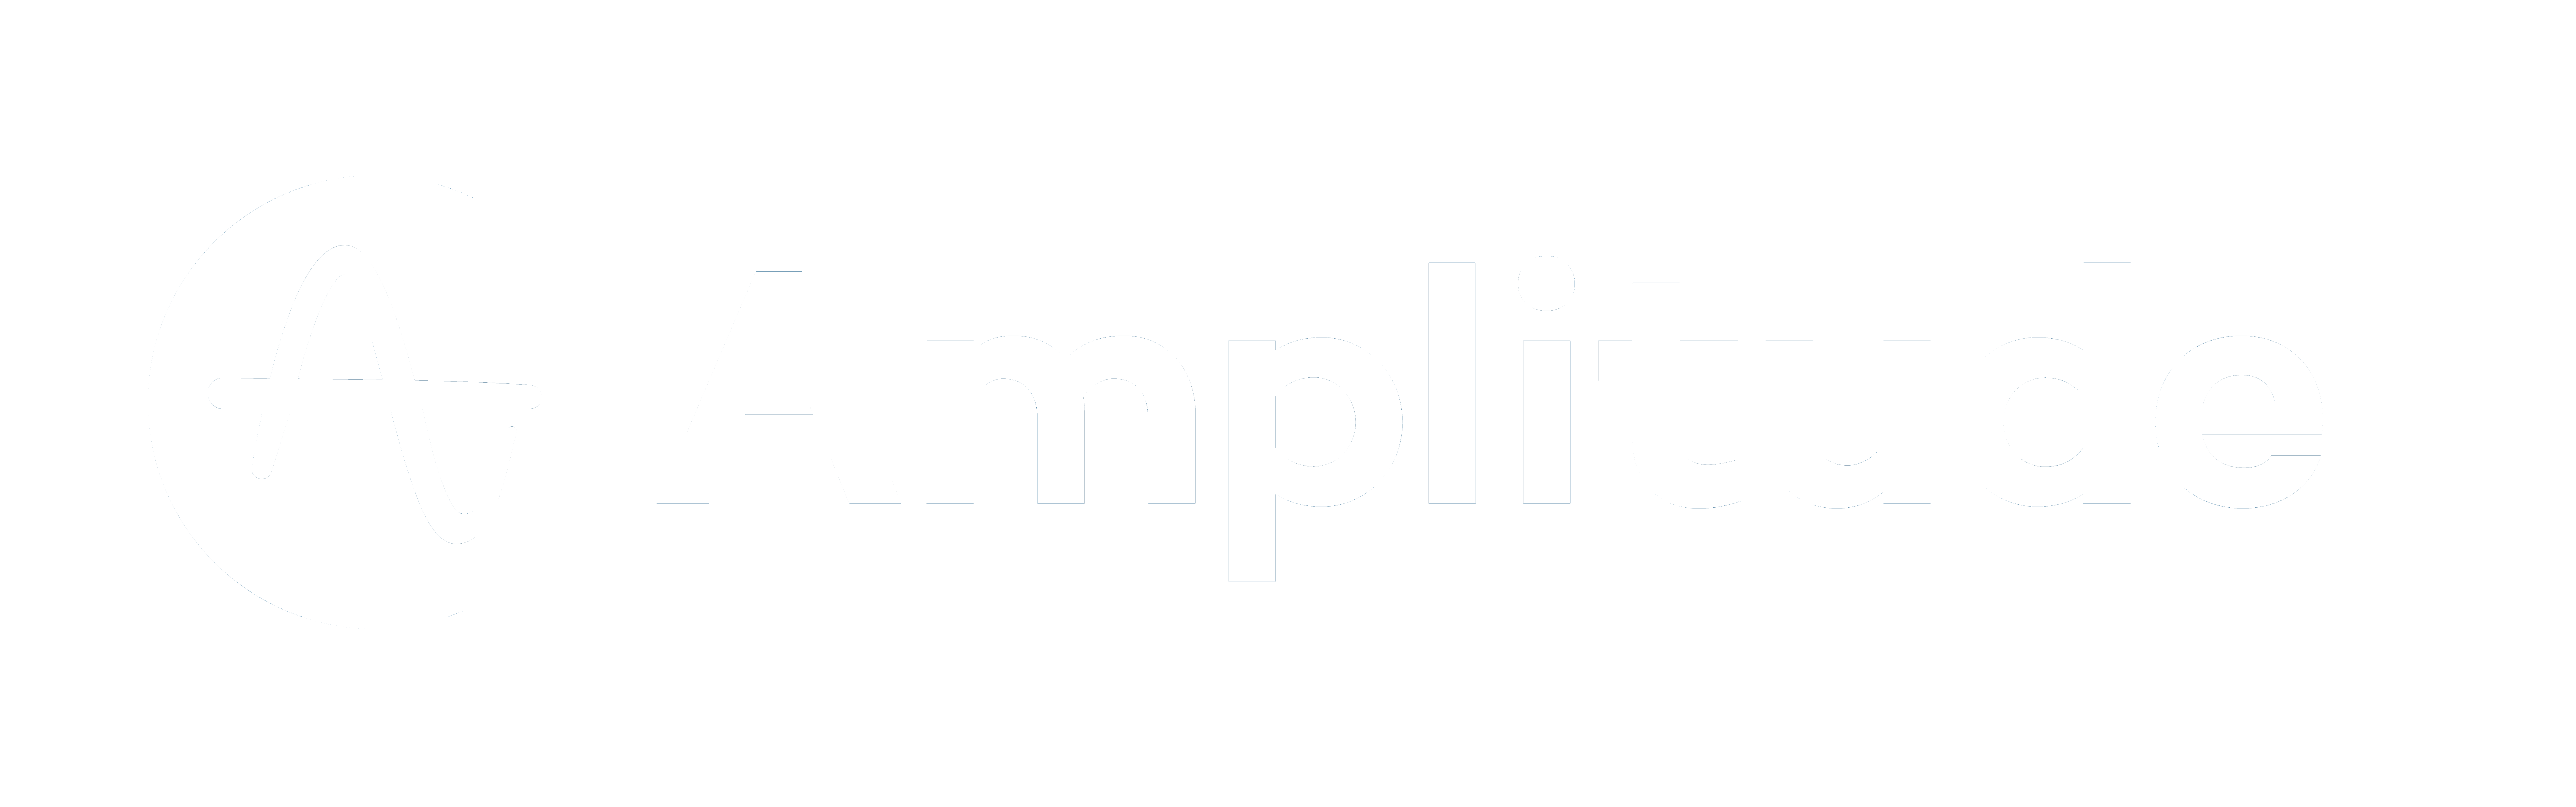 Amplitude logo-1